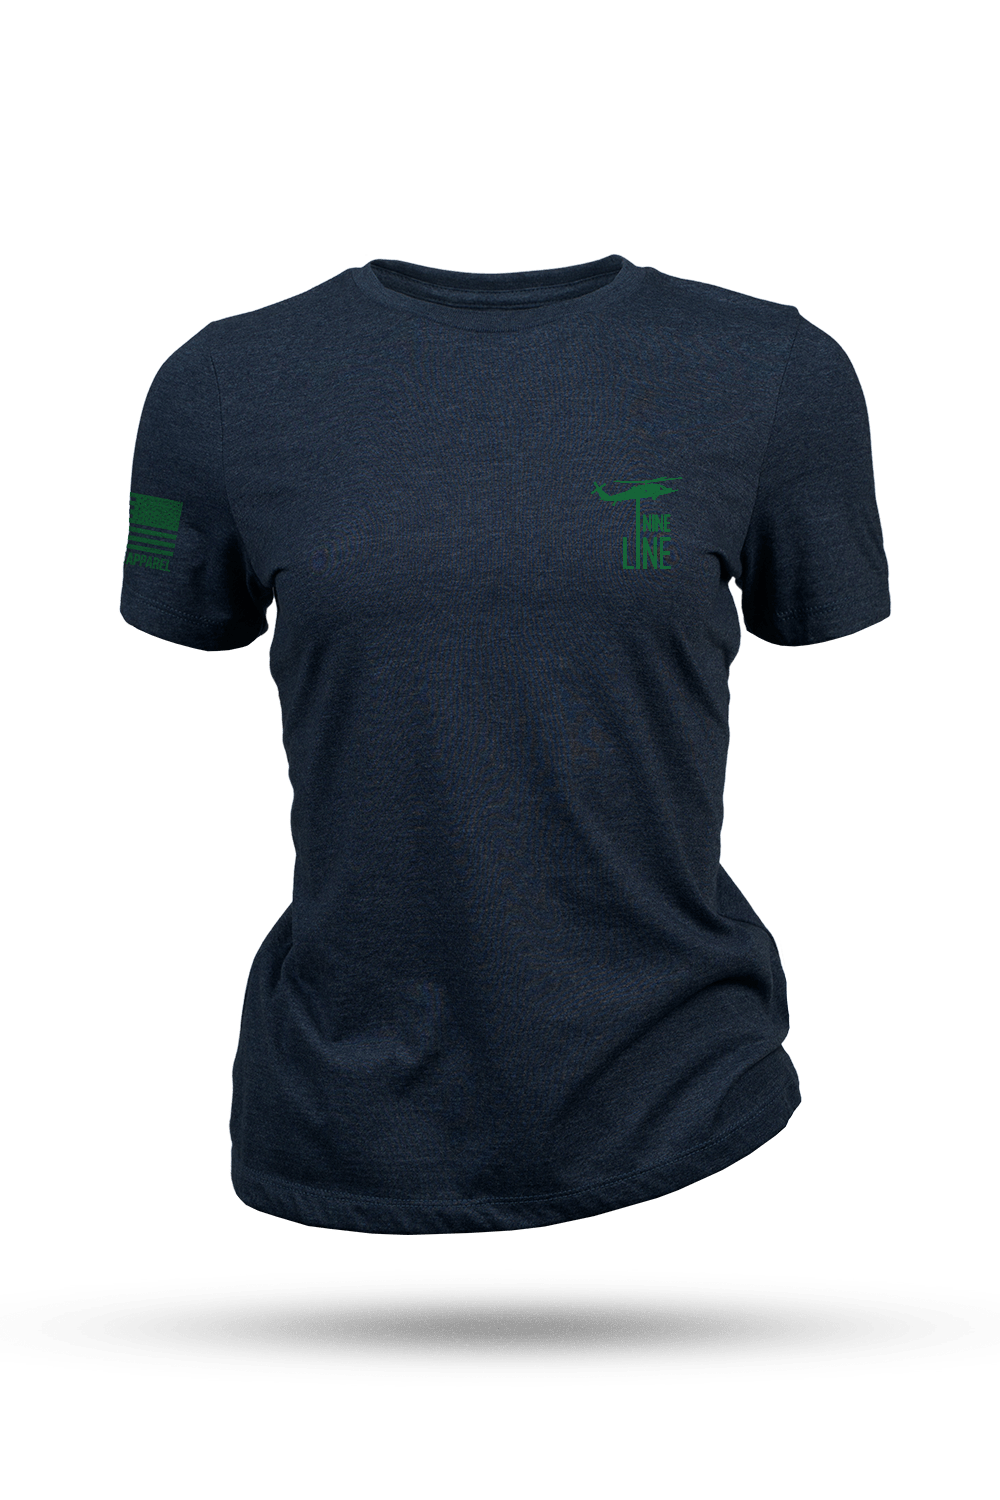 Women's Tri-Blend T-Shirt - St. Patrick's Day Men of Fire - Nine Line Apparel